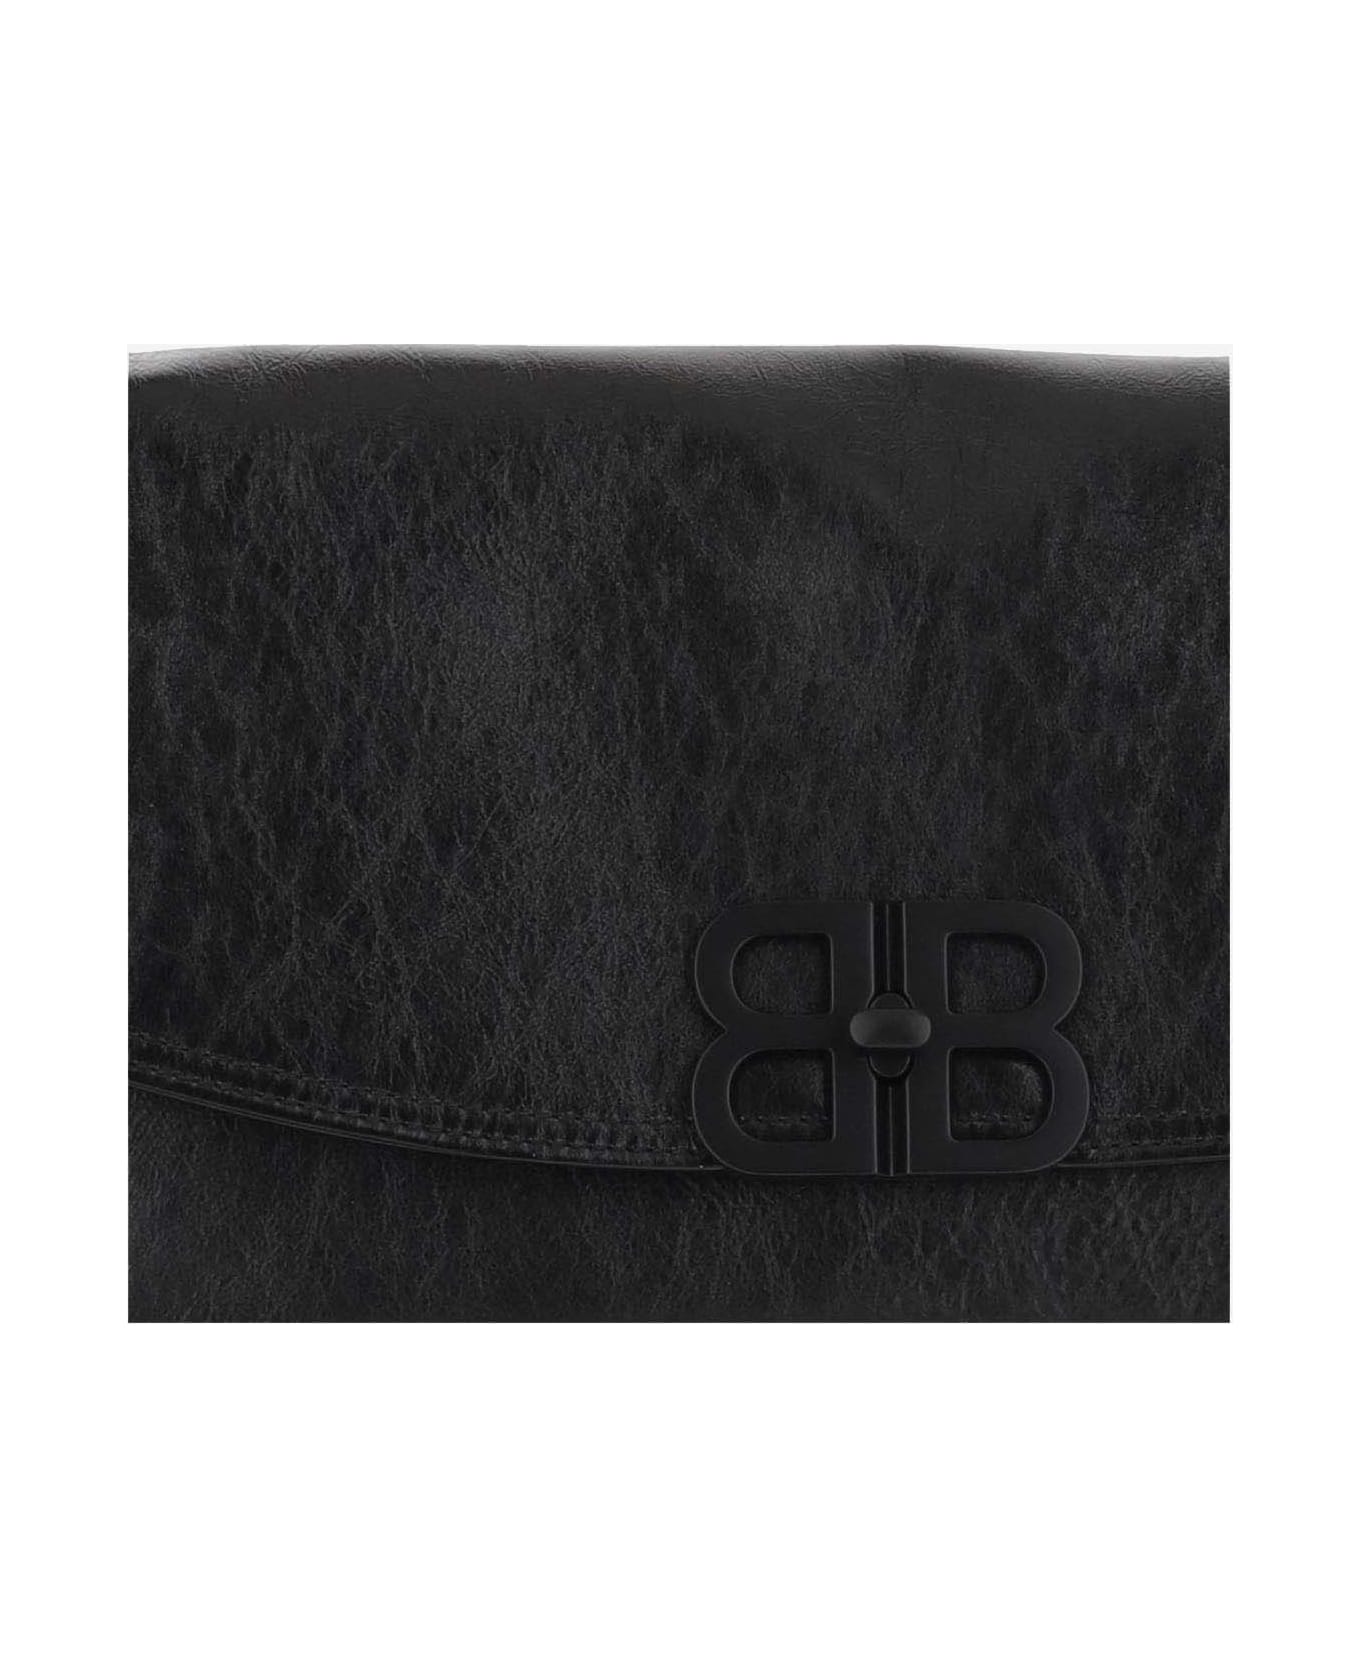 Balenciaga Flap Bag Bb Soft Medium Leather - Black